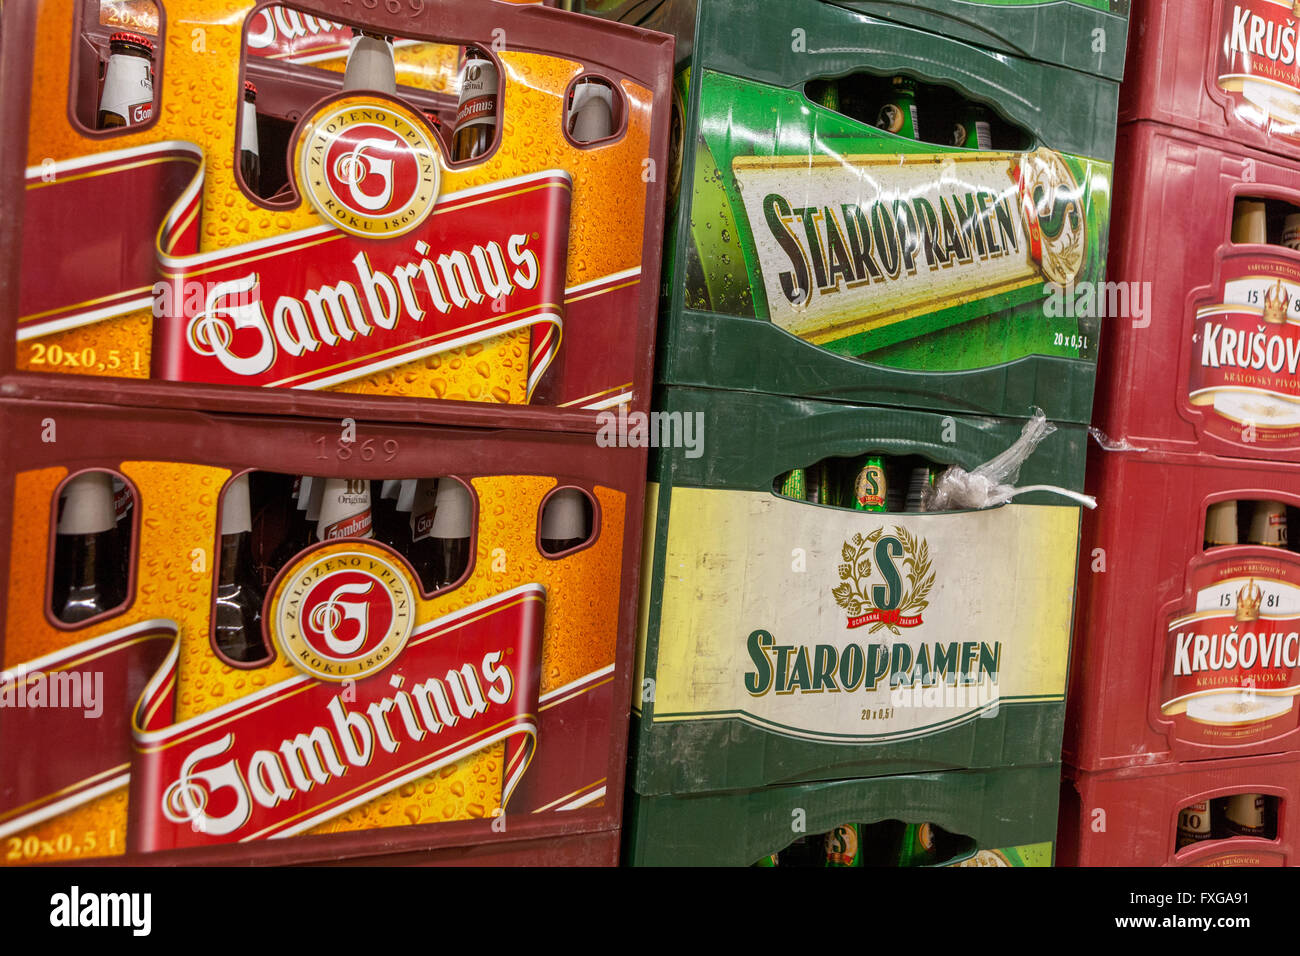 crates-for-czech-beer-gambrinus-staropramen-and-krusovice-in-the-supermarket-FXGA91.jpg